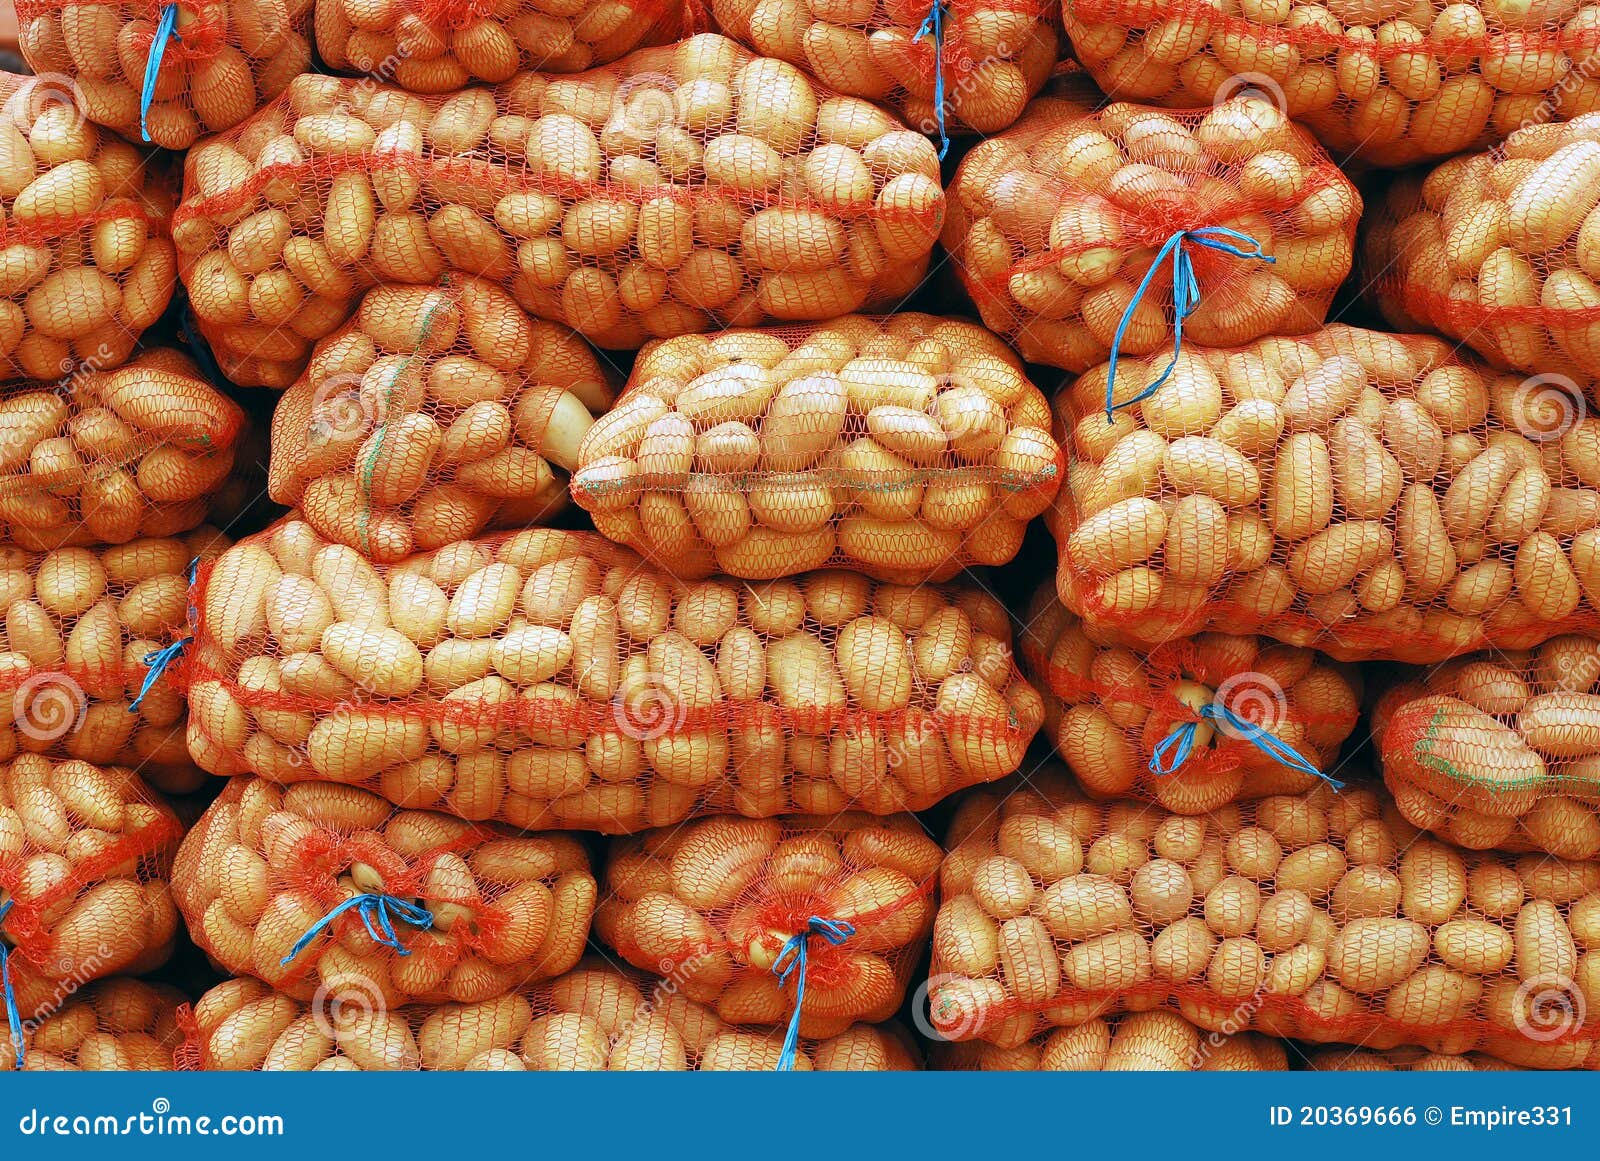 Potato bags stock photo. Image of potatoes, vegetable - 20369666